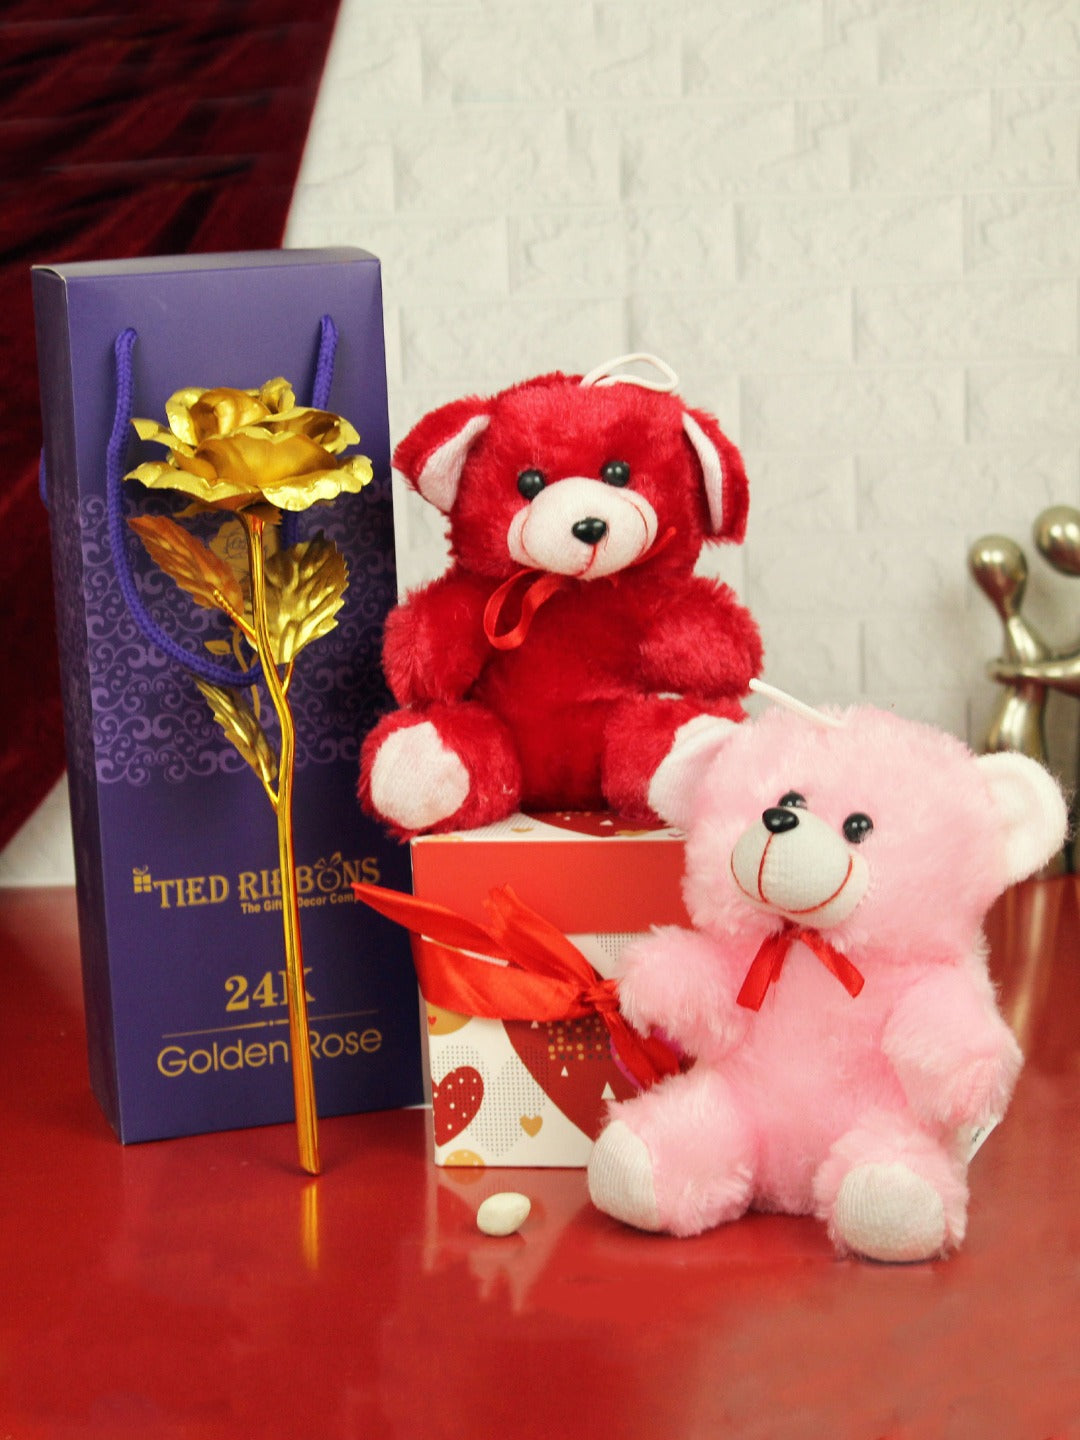 Details more than 170 valentine rose gift